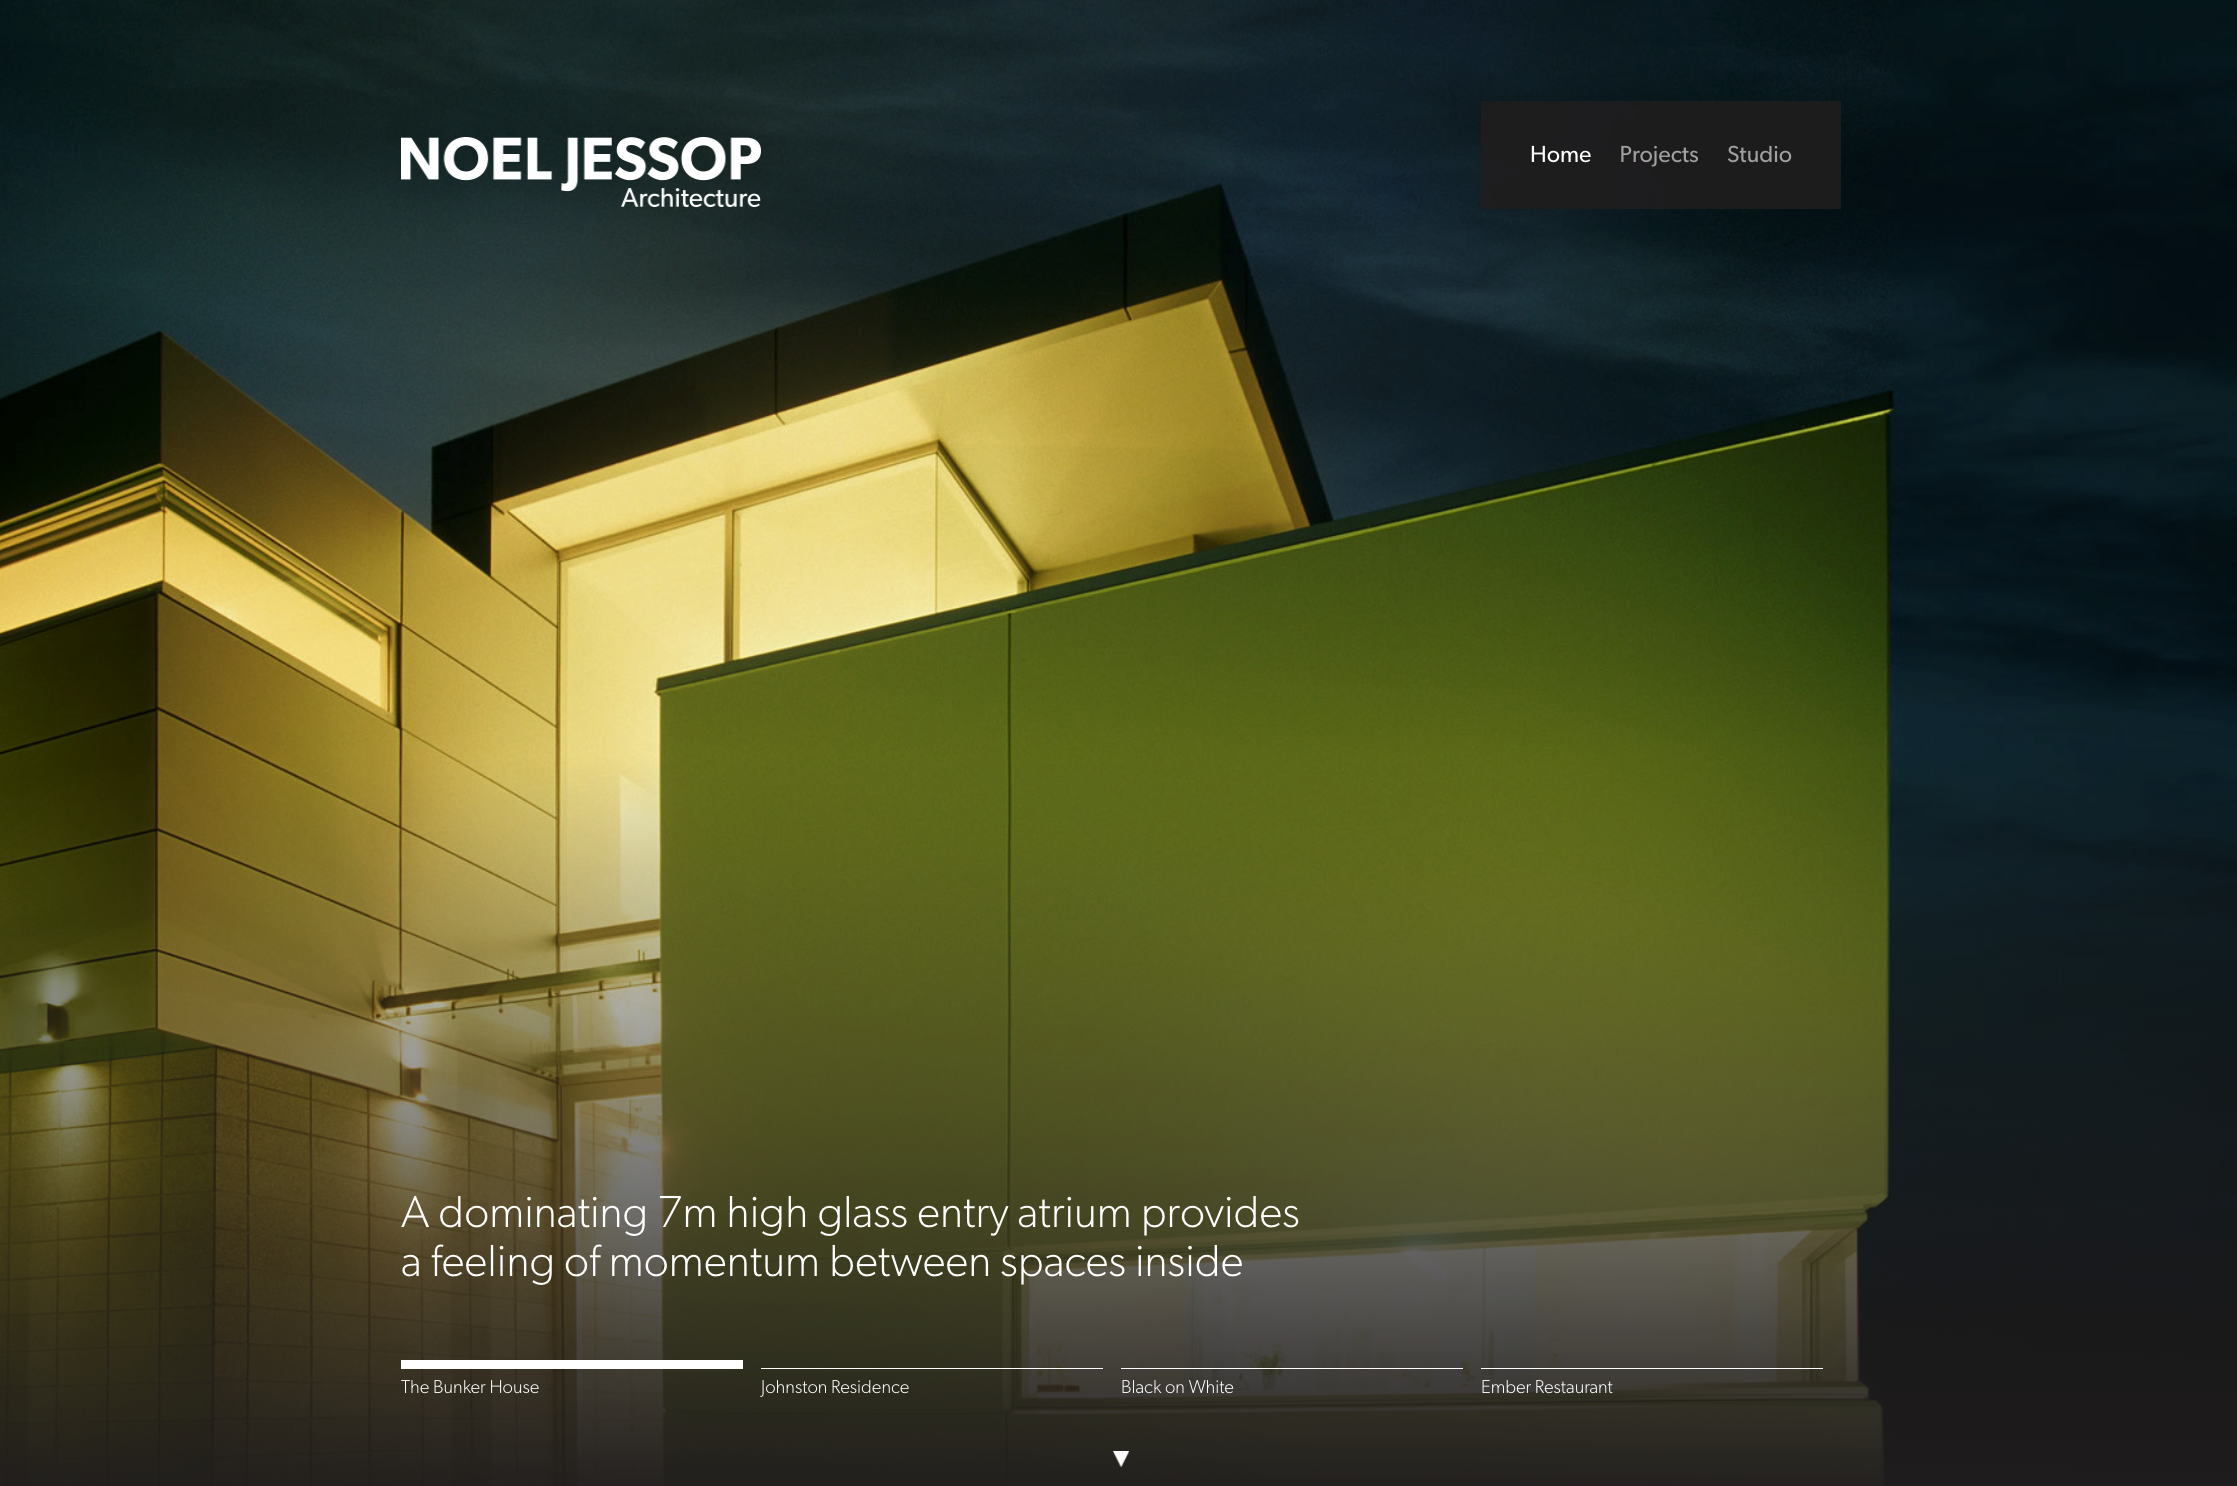 Noel Jessop Architecture Website